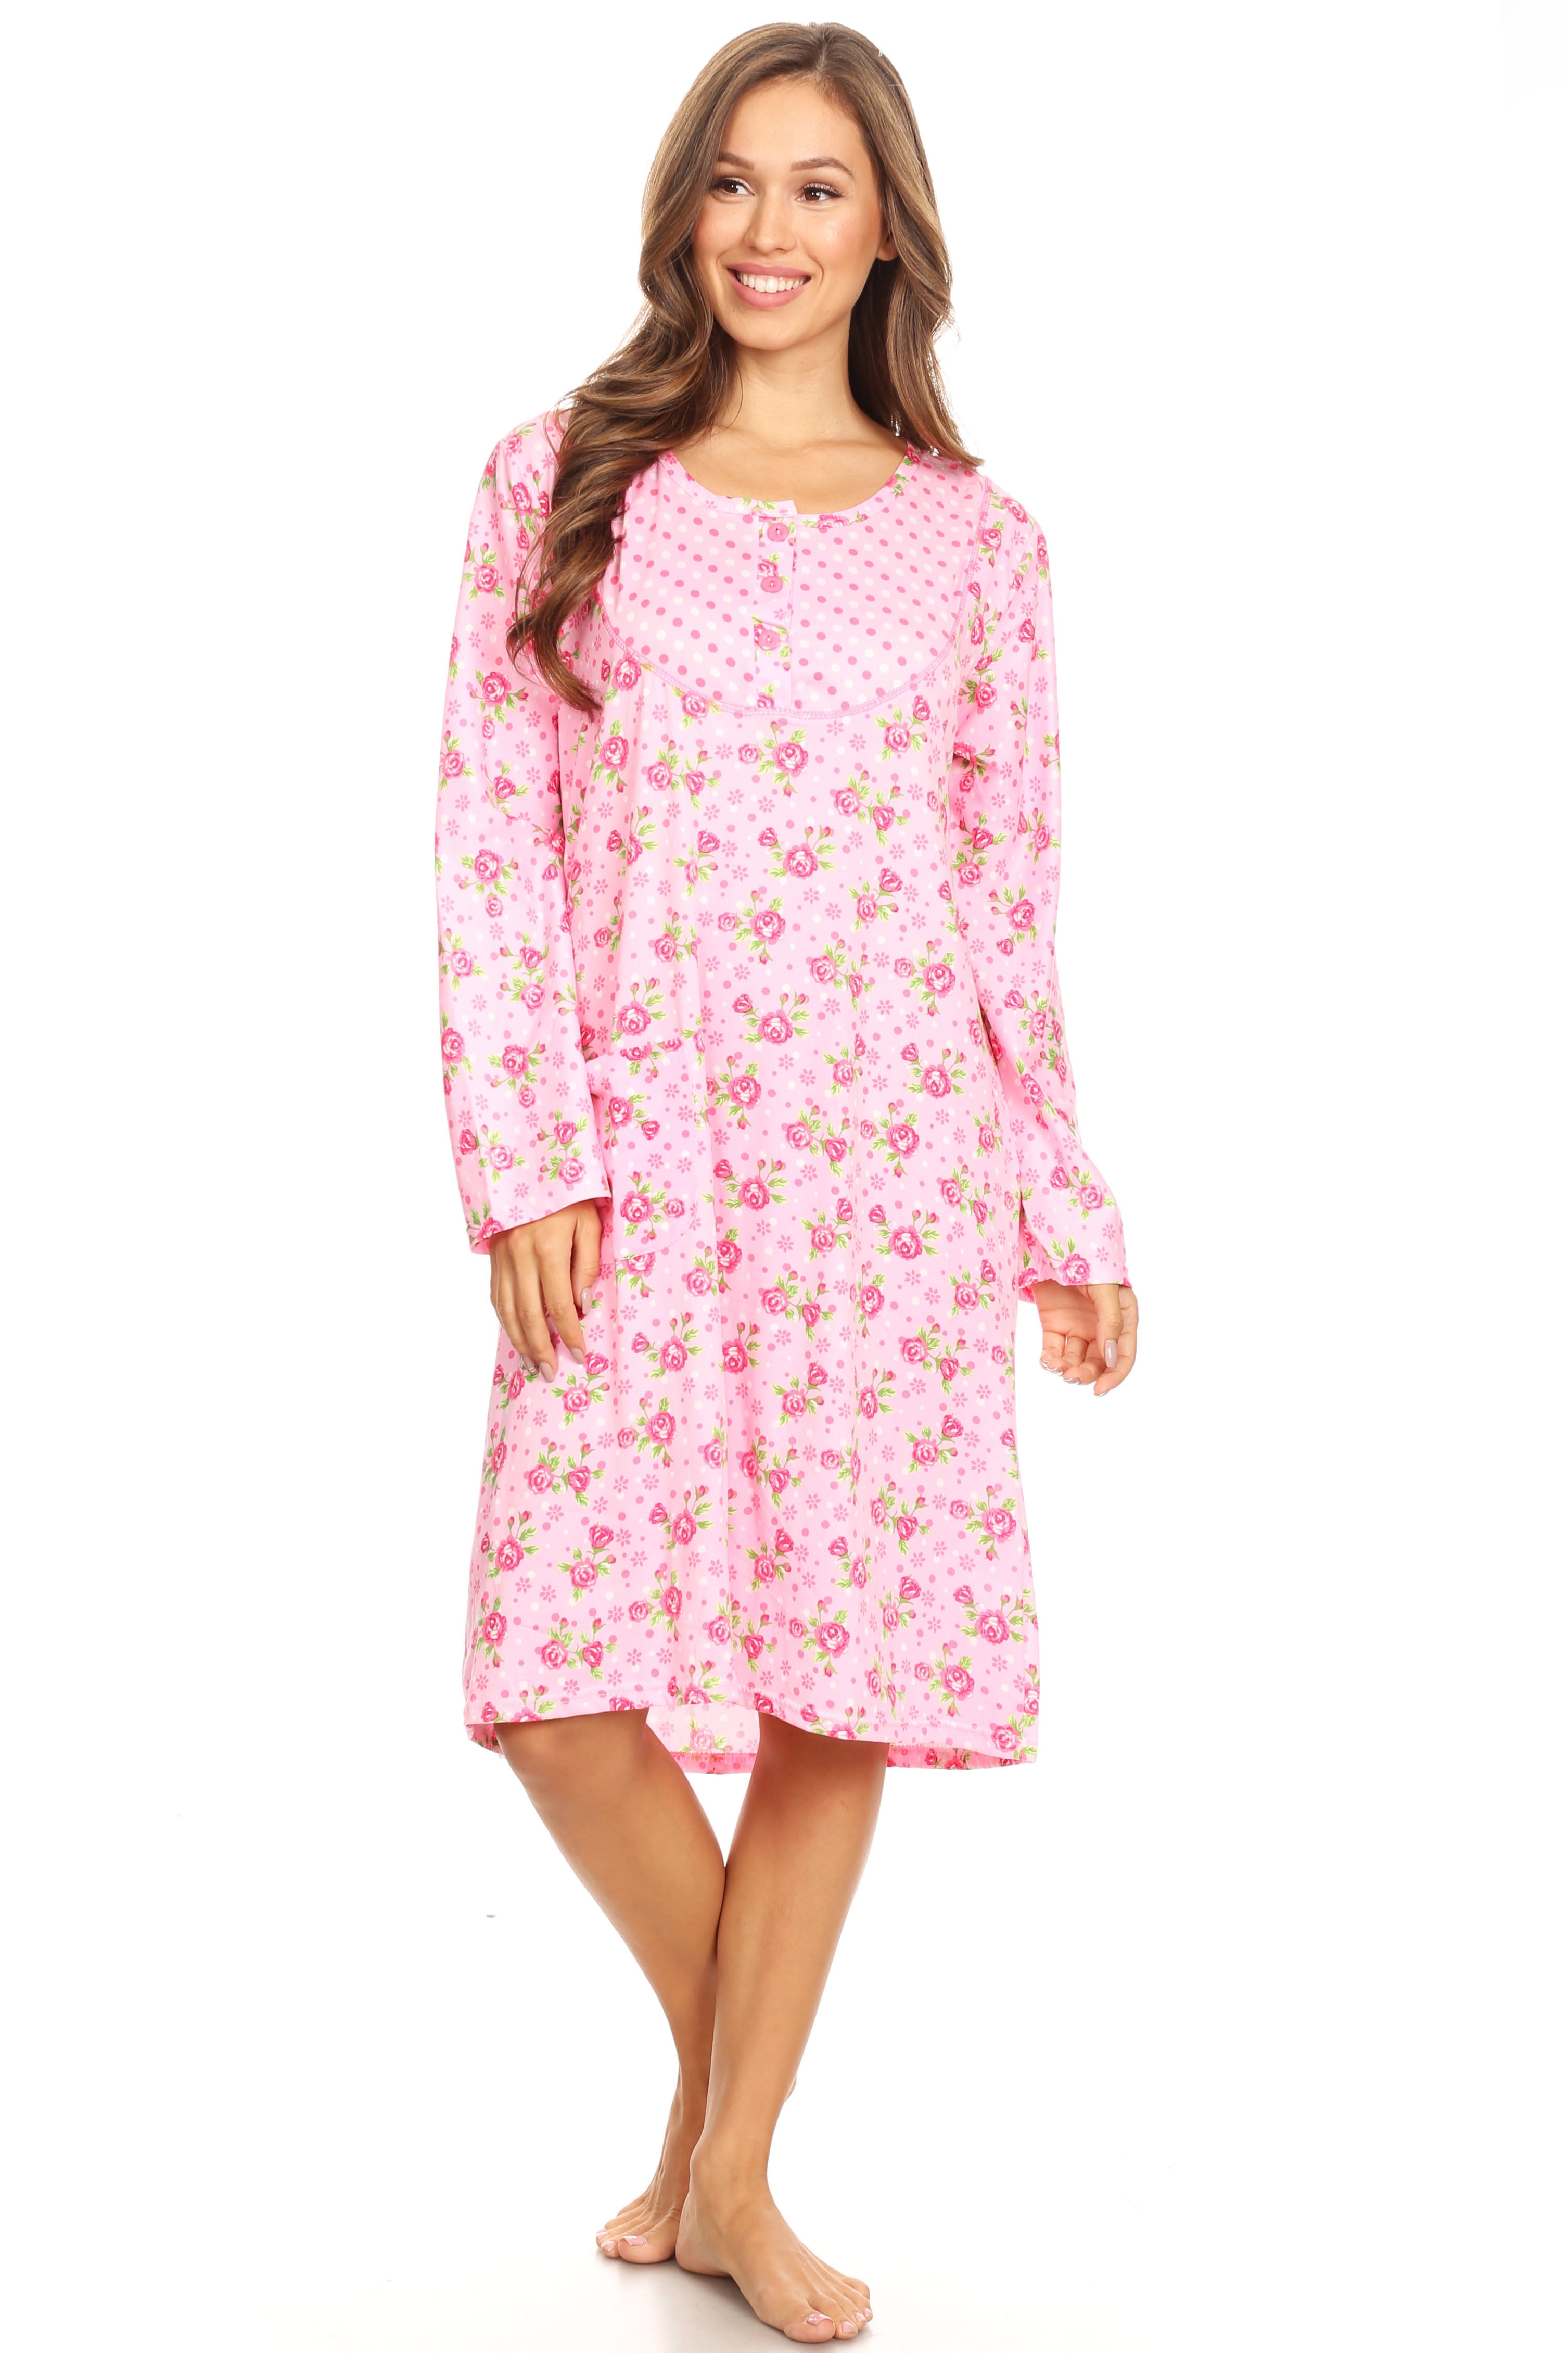 6010 Womens Nightgown Sleepwear Pajamas Woman Long Sleeve Sleep Dress ...